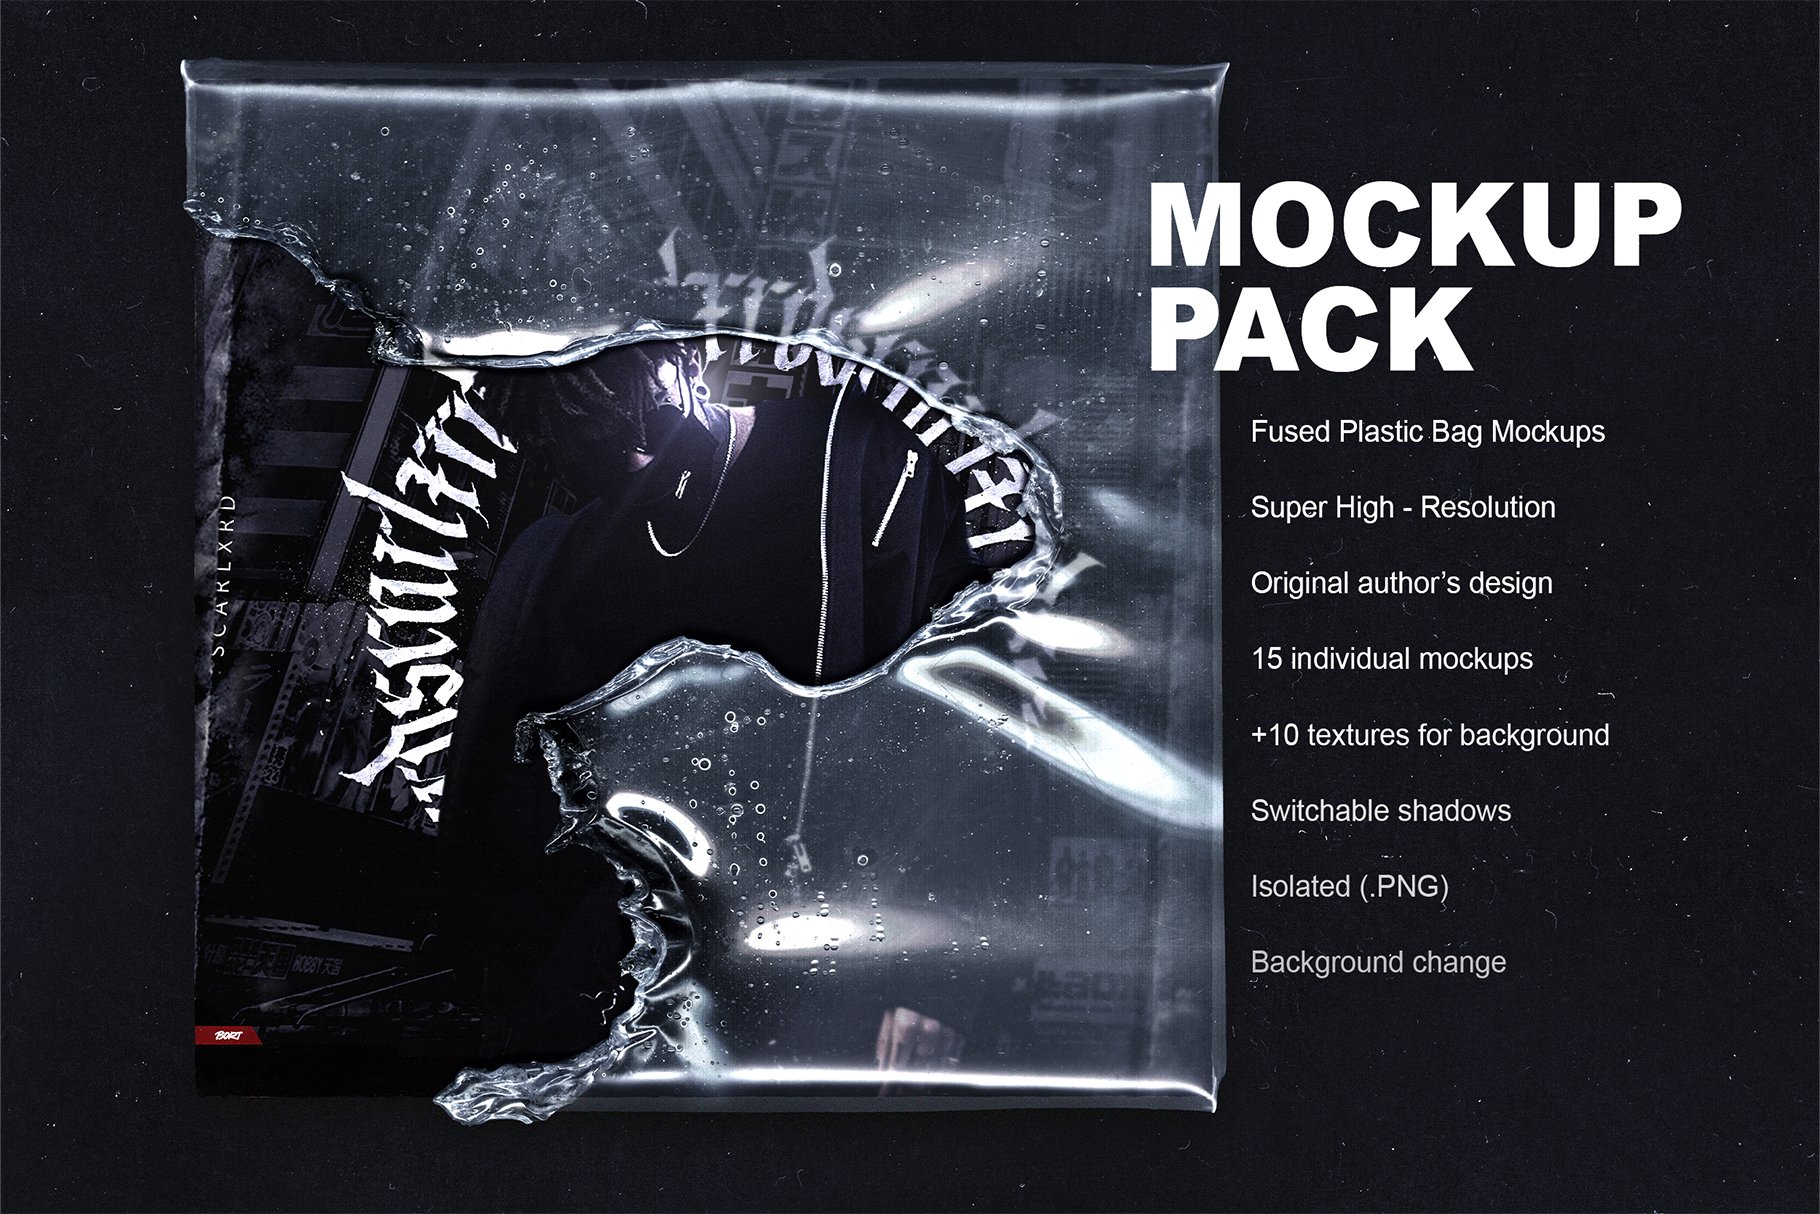 Fused Plastic Bag Mockup Pack cover image.